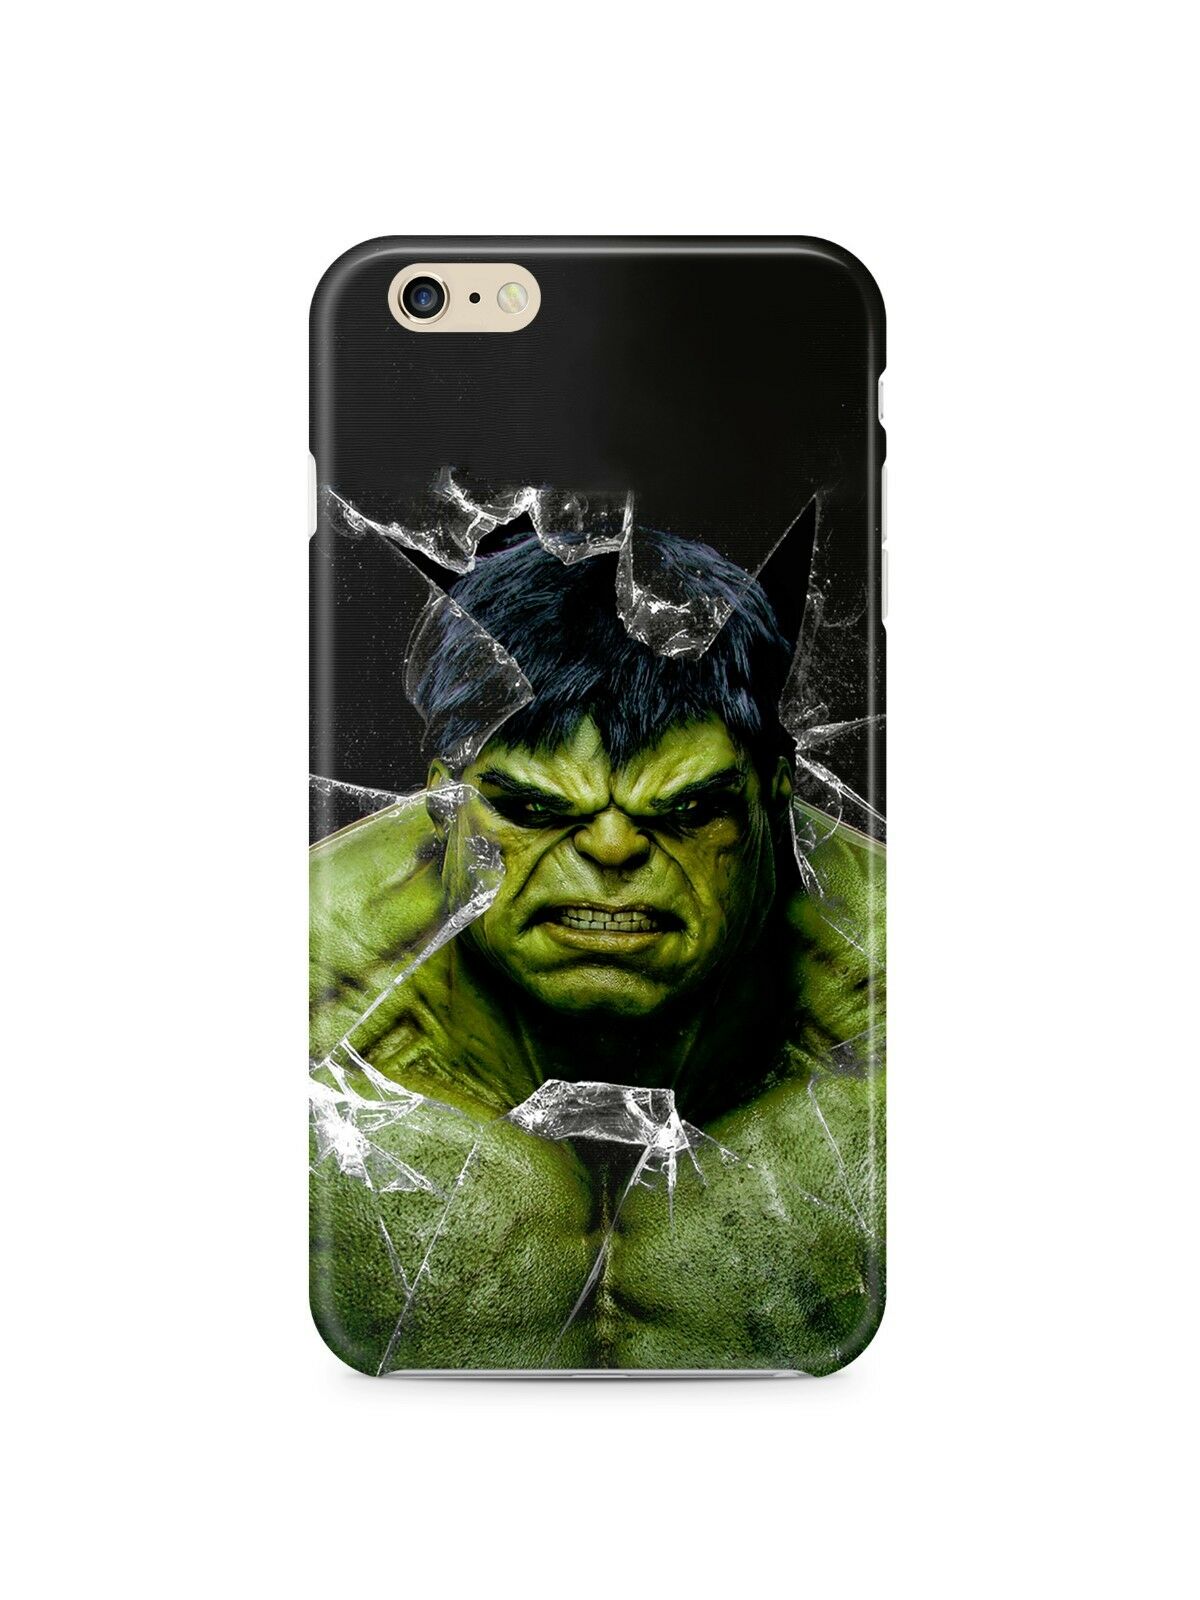 Incredible Hulk Superhero Marvel Iphone 4s 5s 6 7 8 X XS Max XR 11 Pro Plus Case caselegendcaselegend For iPhone 6\6s Plus 